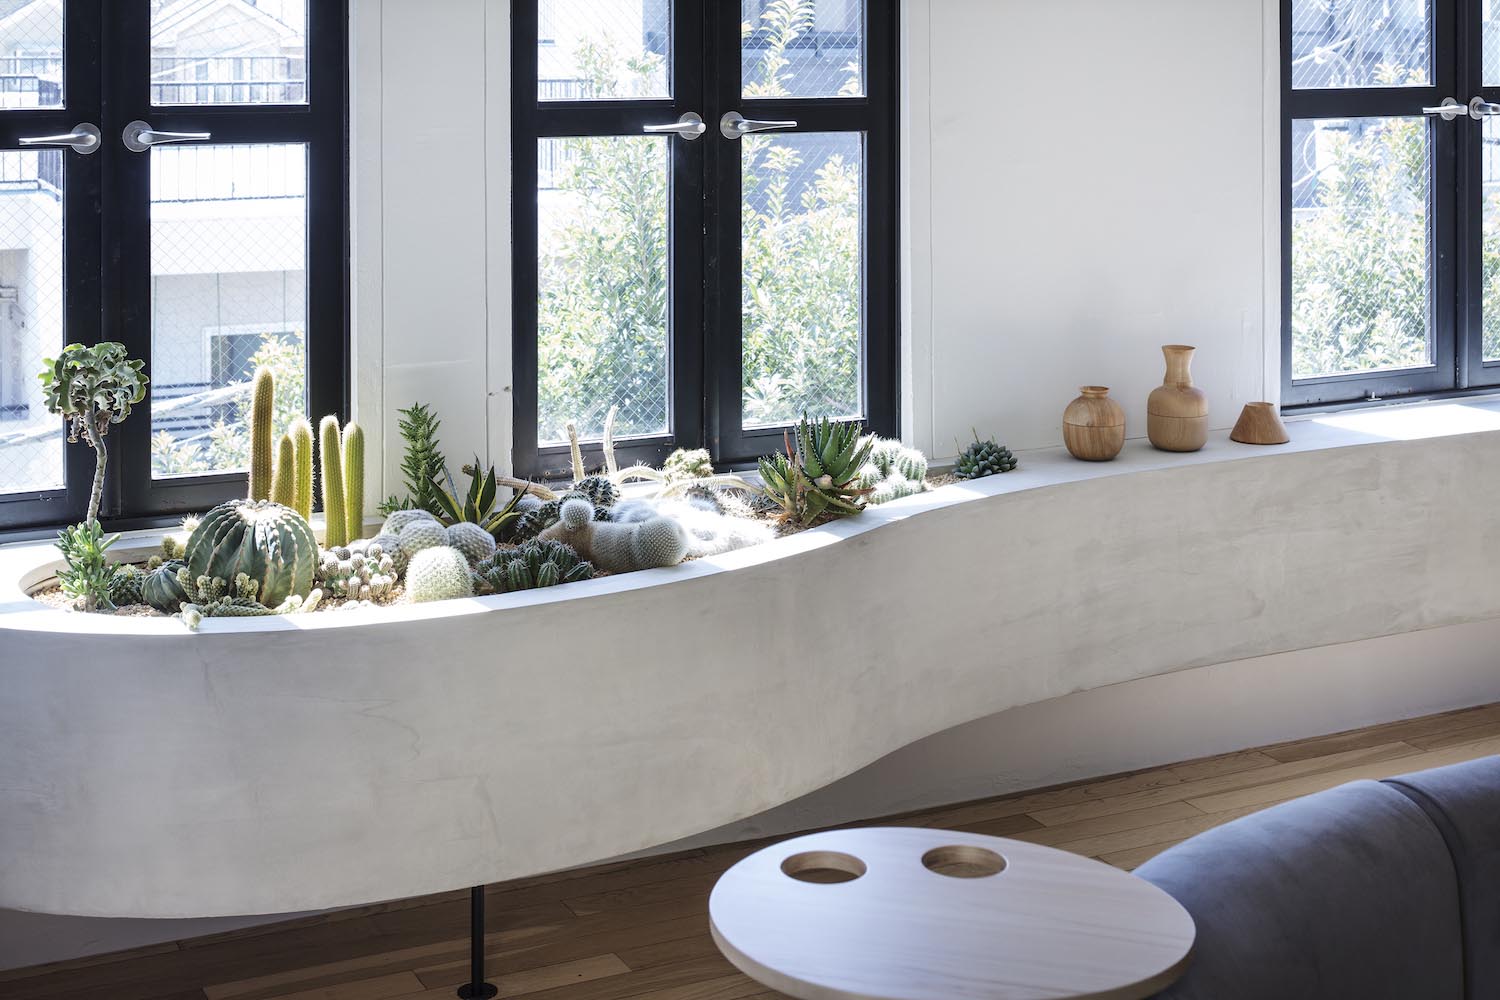 A cacti garden has been included in a built-in indoor planter.